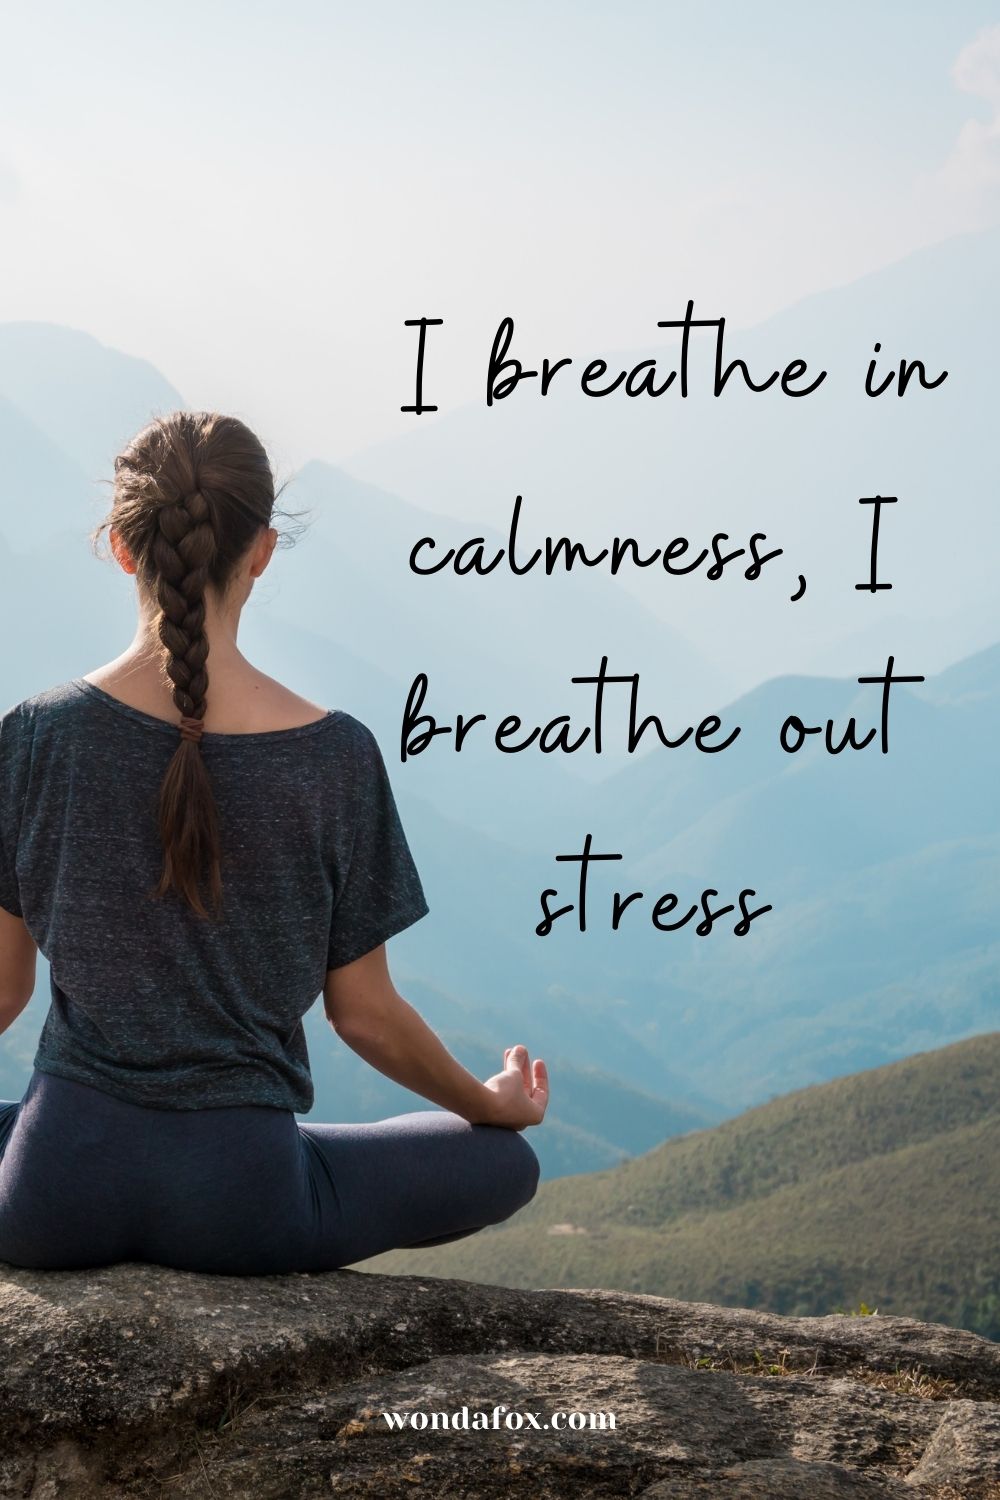  I breathe in calmness, I breathe out stress